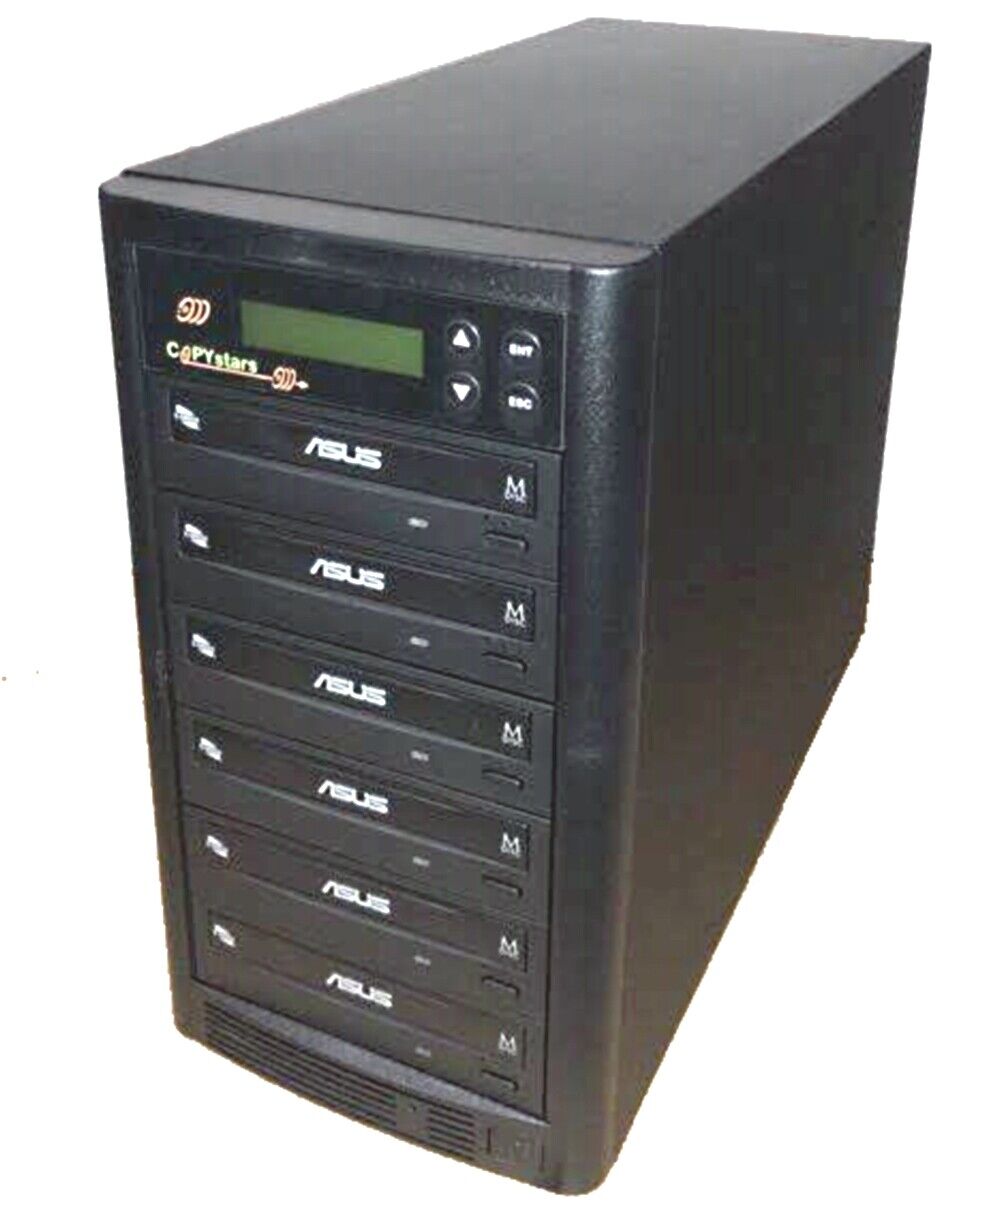 Copystars 1TB Hard drive Smart IOS +USB 6 Burners SATA CD DVD Duplicator copier